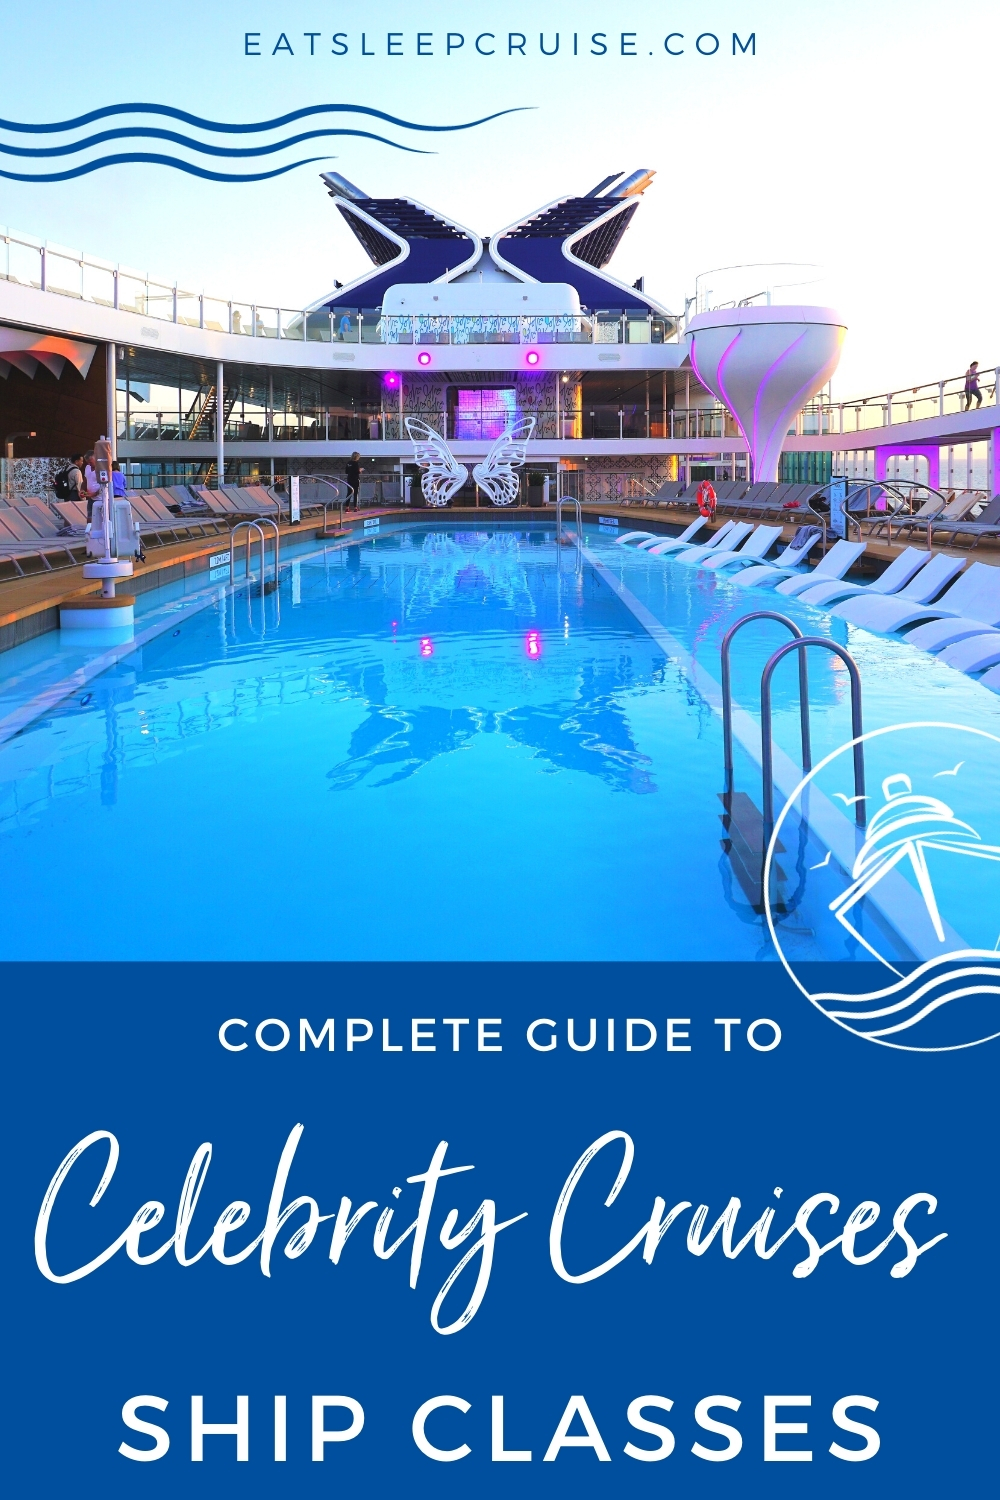 celebrity cruises ship class